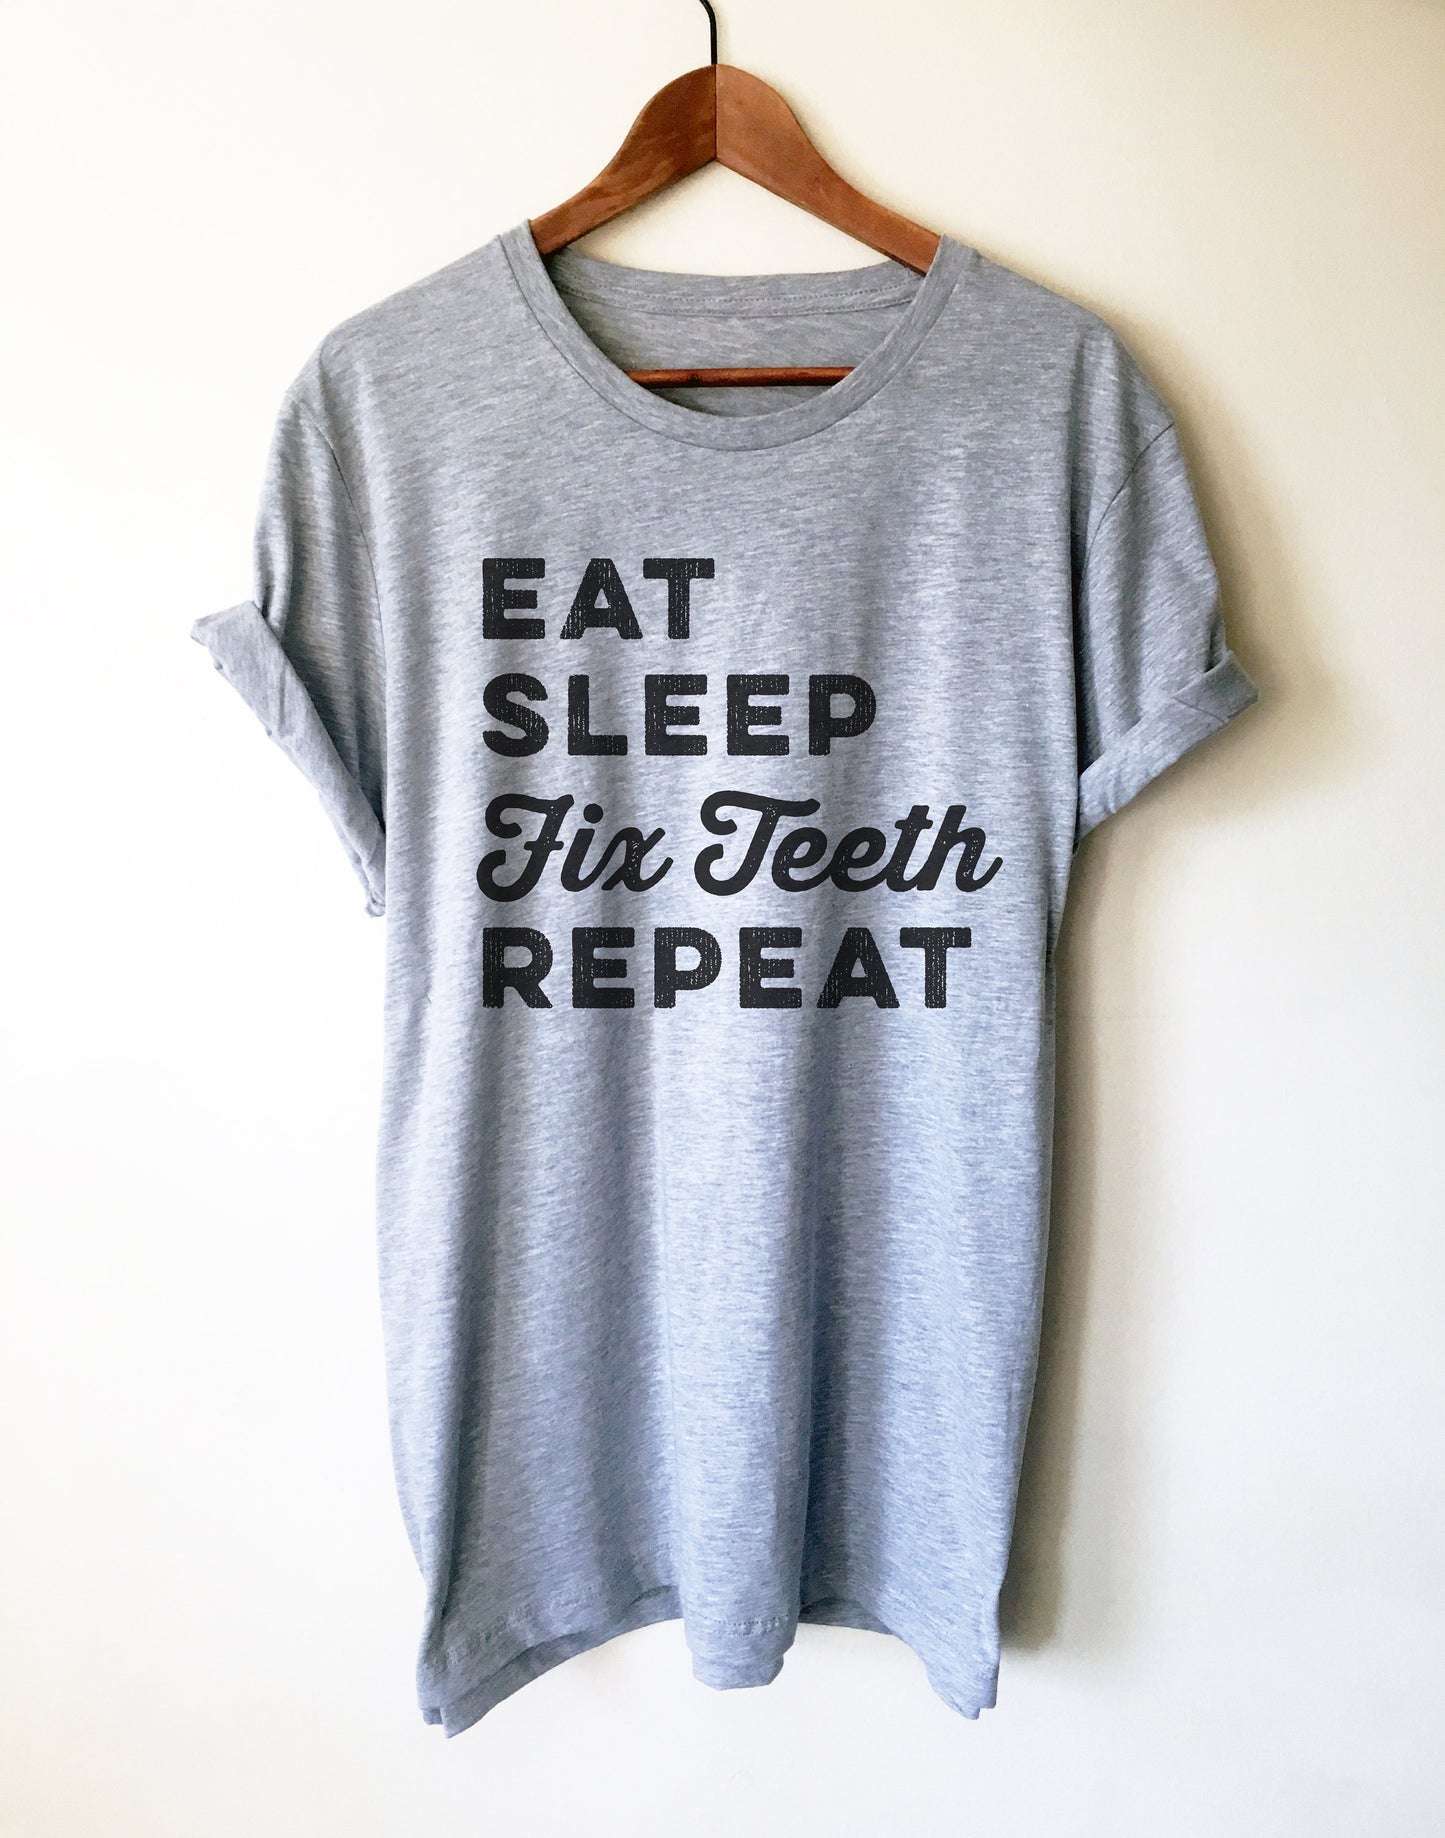 Eat Sleep Fix Teeth Repeat Unisex Shirt - Dentist Gift, Dentist Shirt, Dental Student Gift, Dental Assistant, Dental Hygienist, Dental Shirt